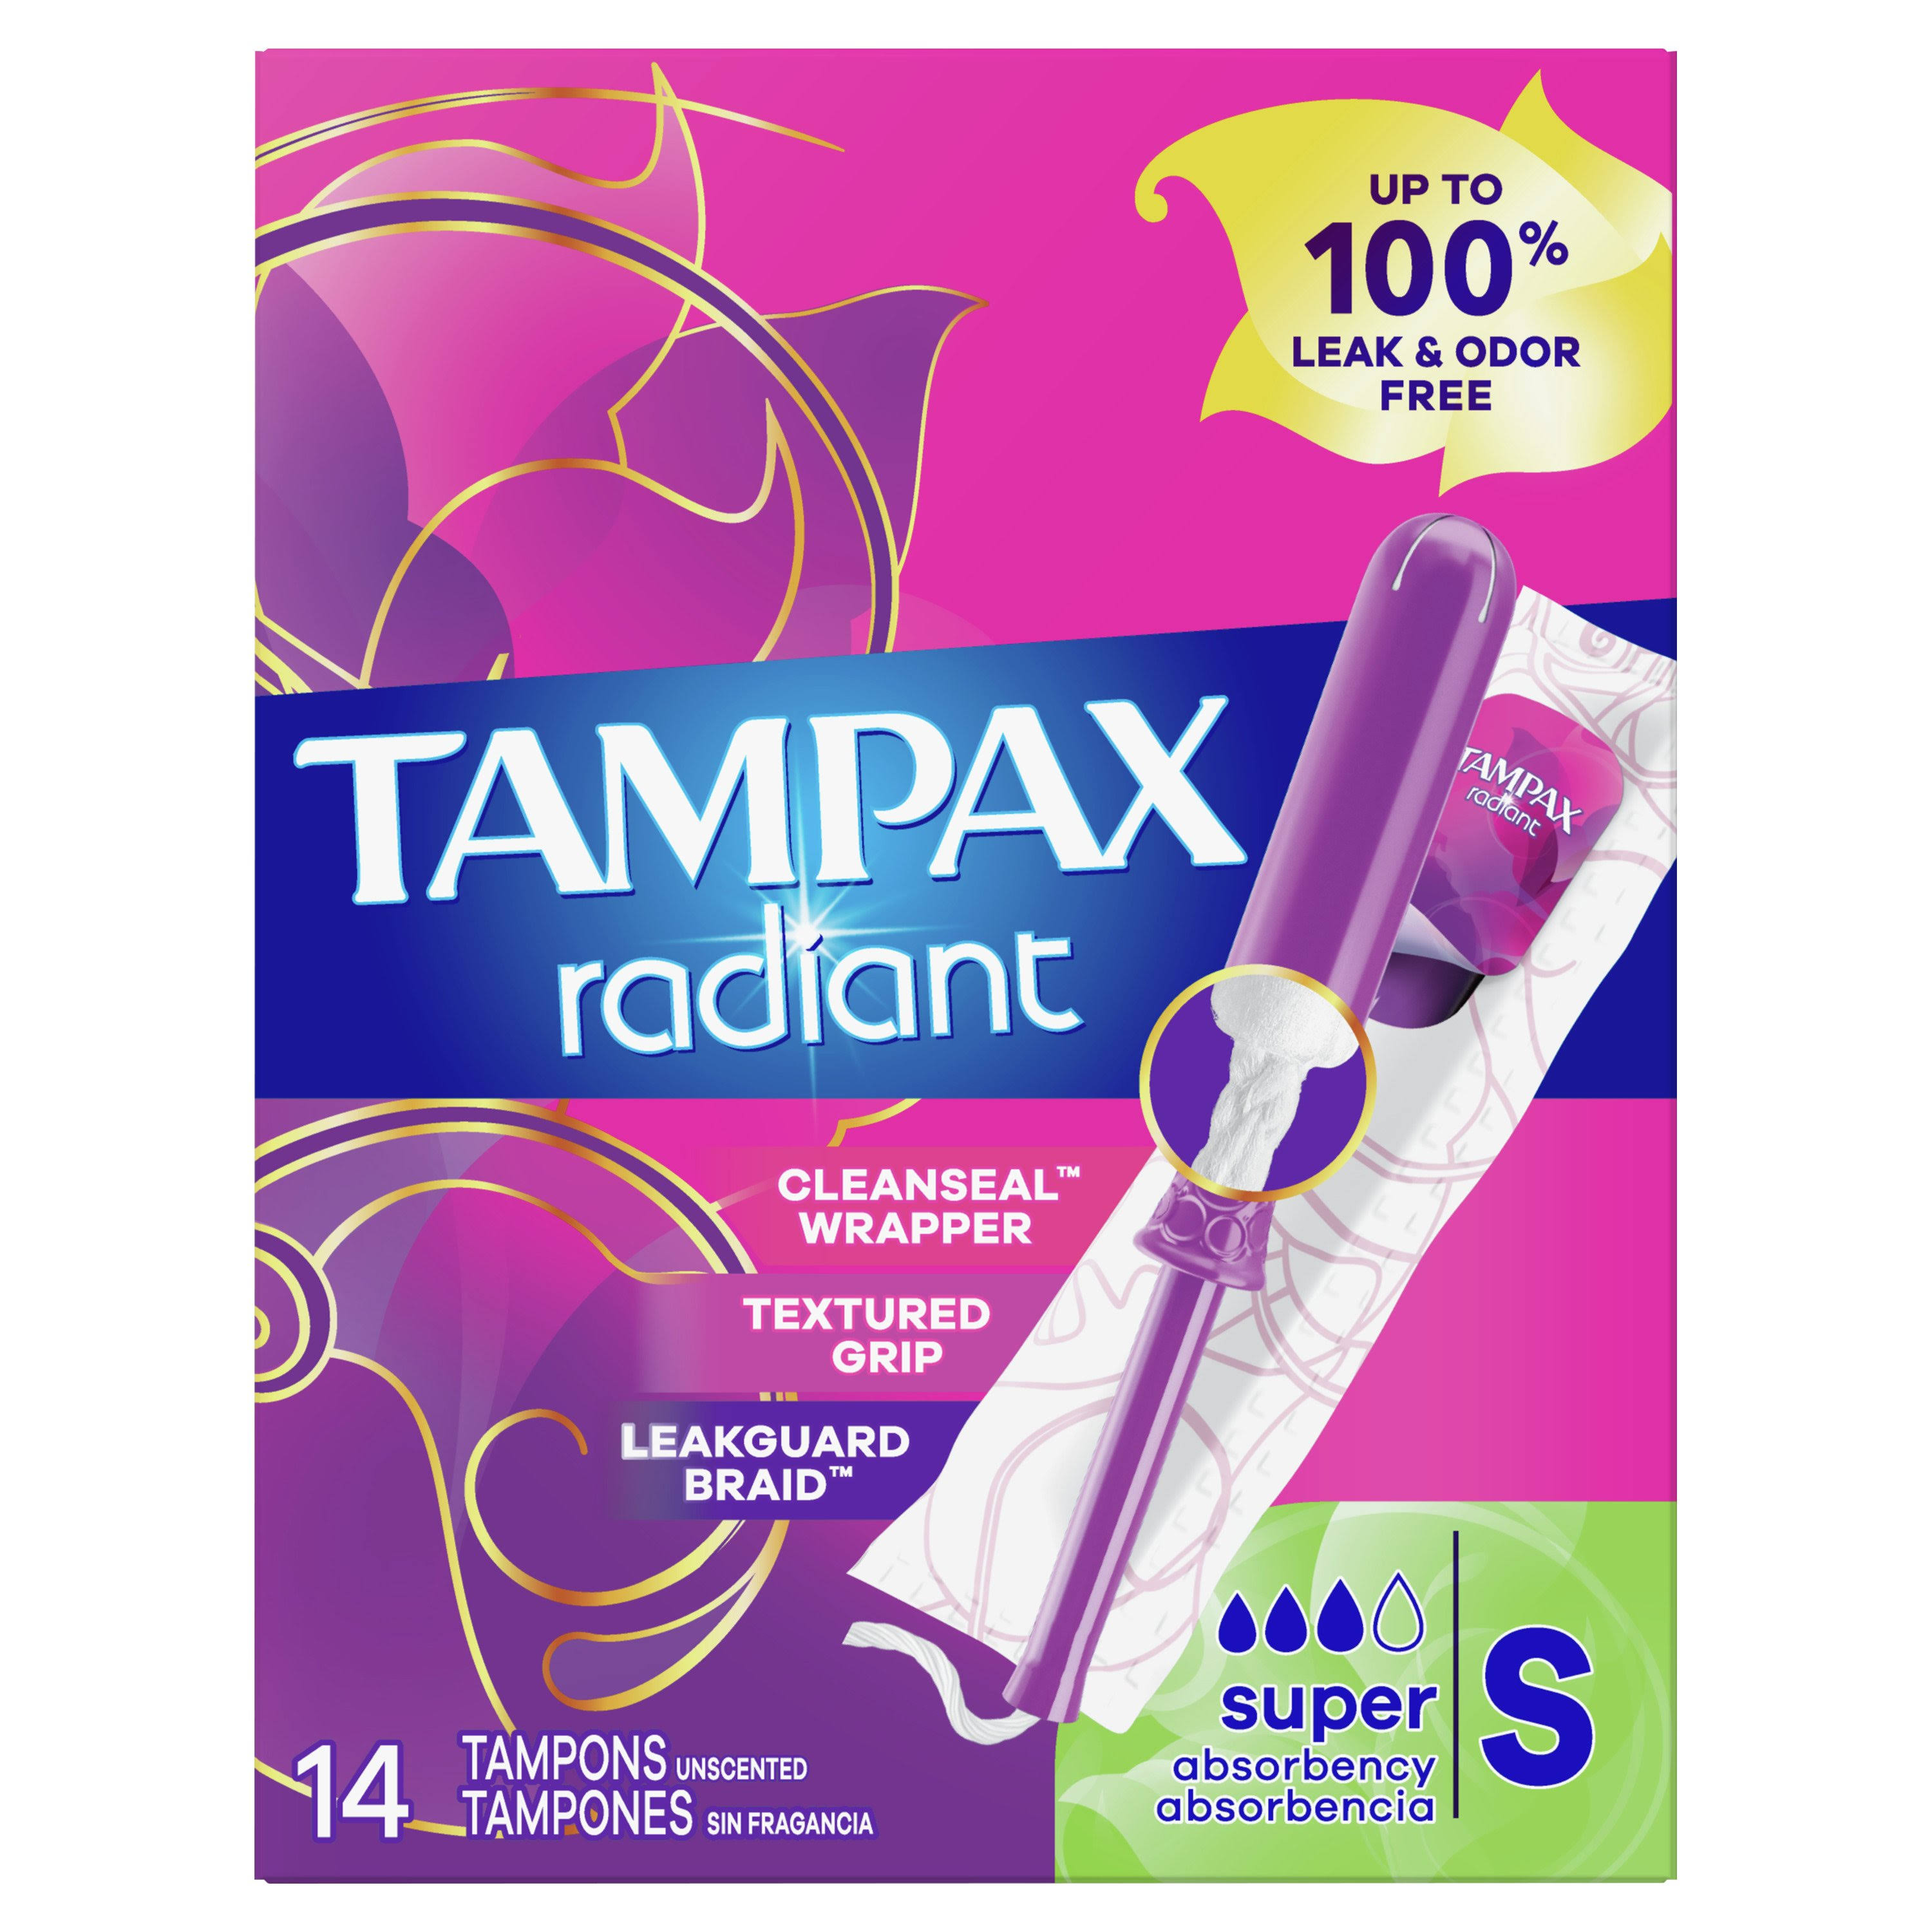 Tampax Radiant Tampons Regular Super - 14 ct